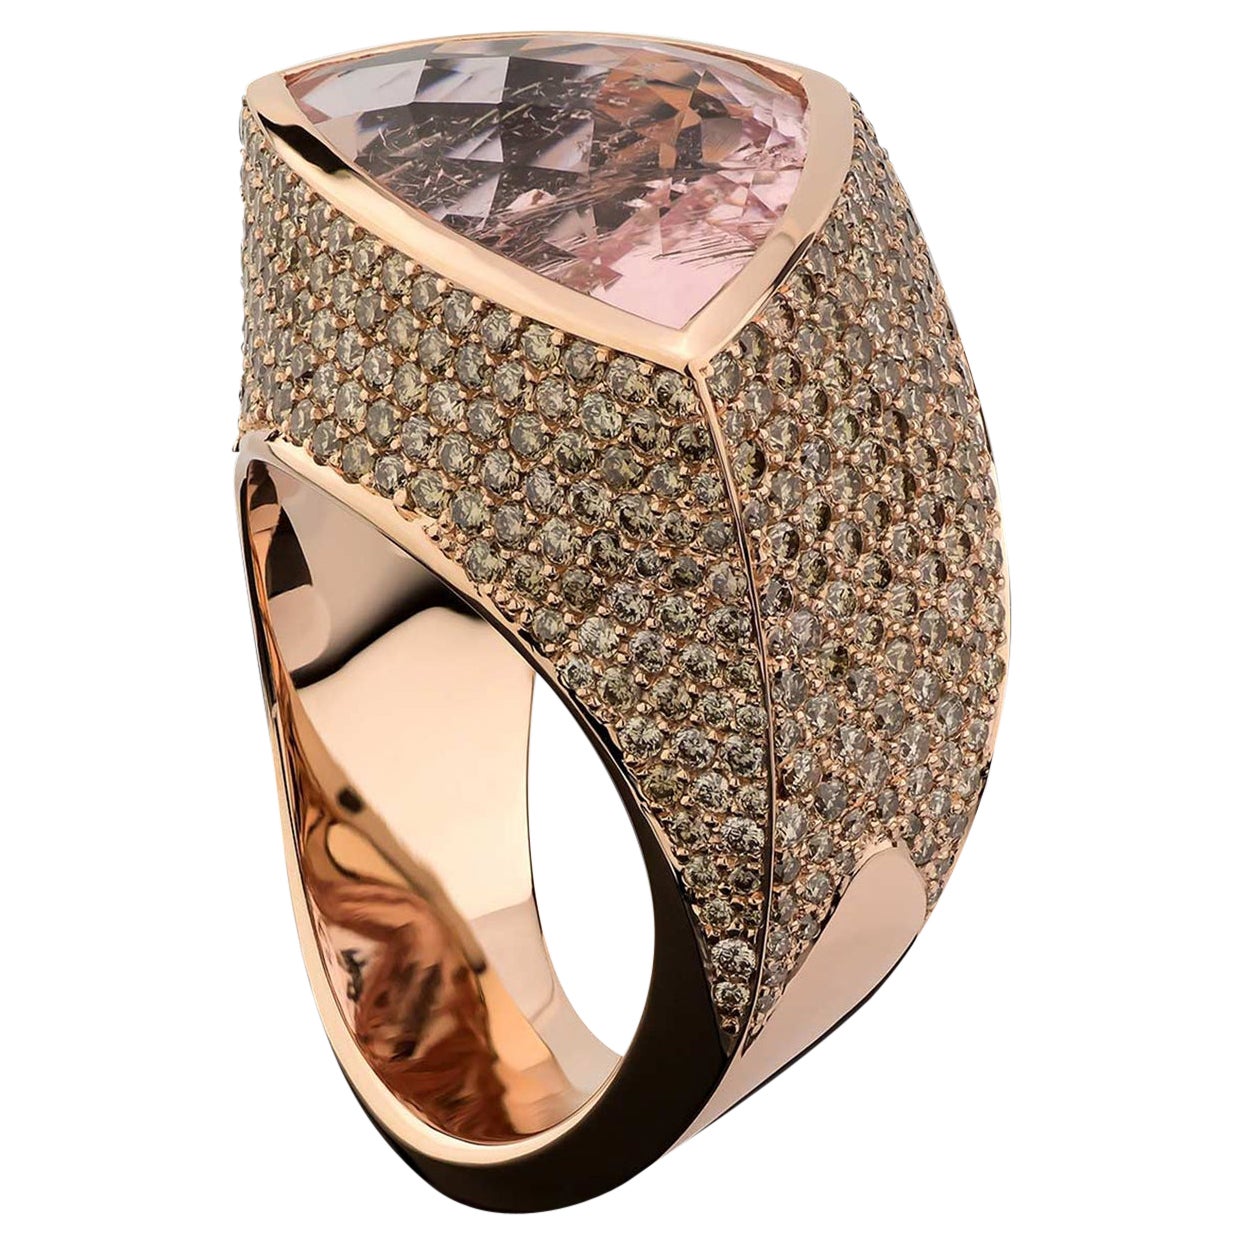 Morganite cocktail ring ca 10.37 ct, 18K rose gold, 419 hand set diamonds